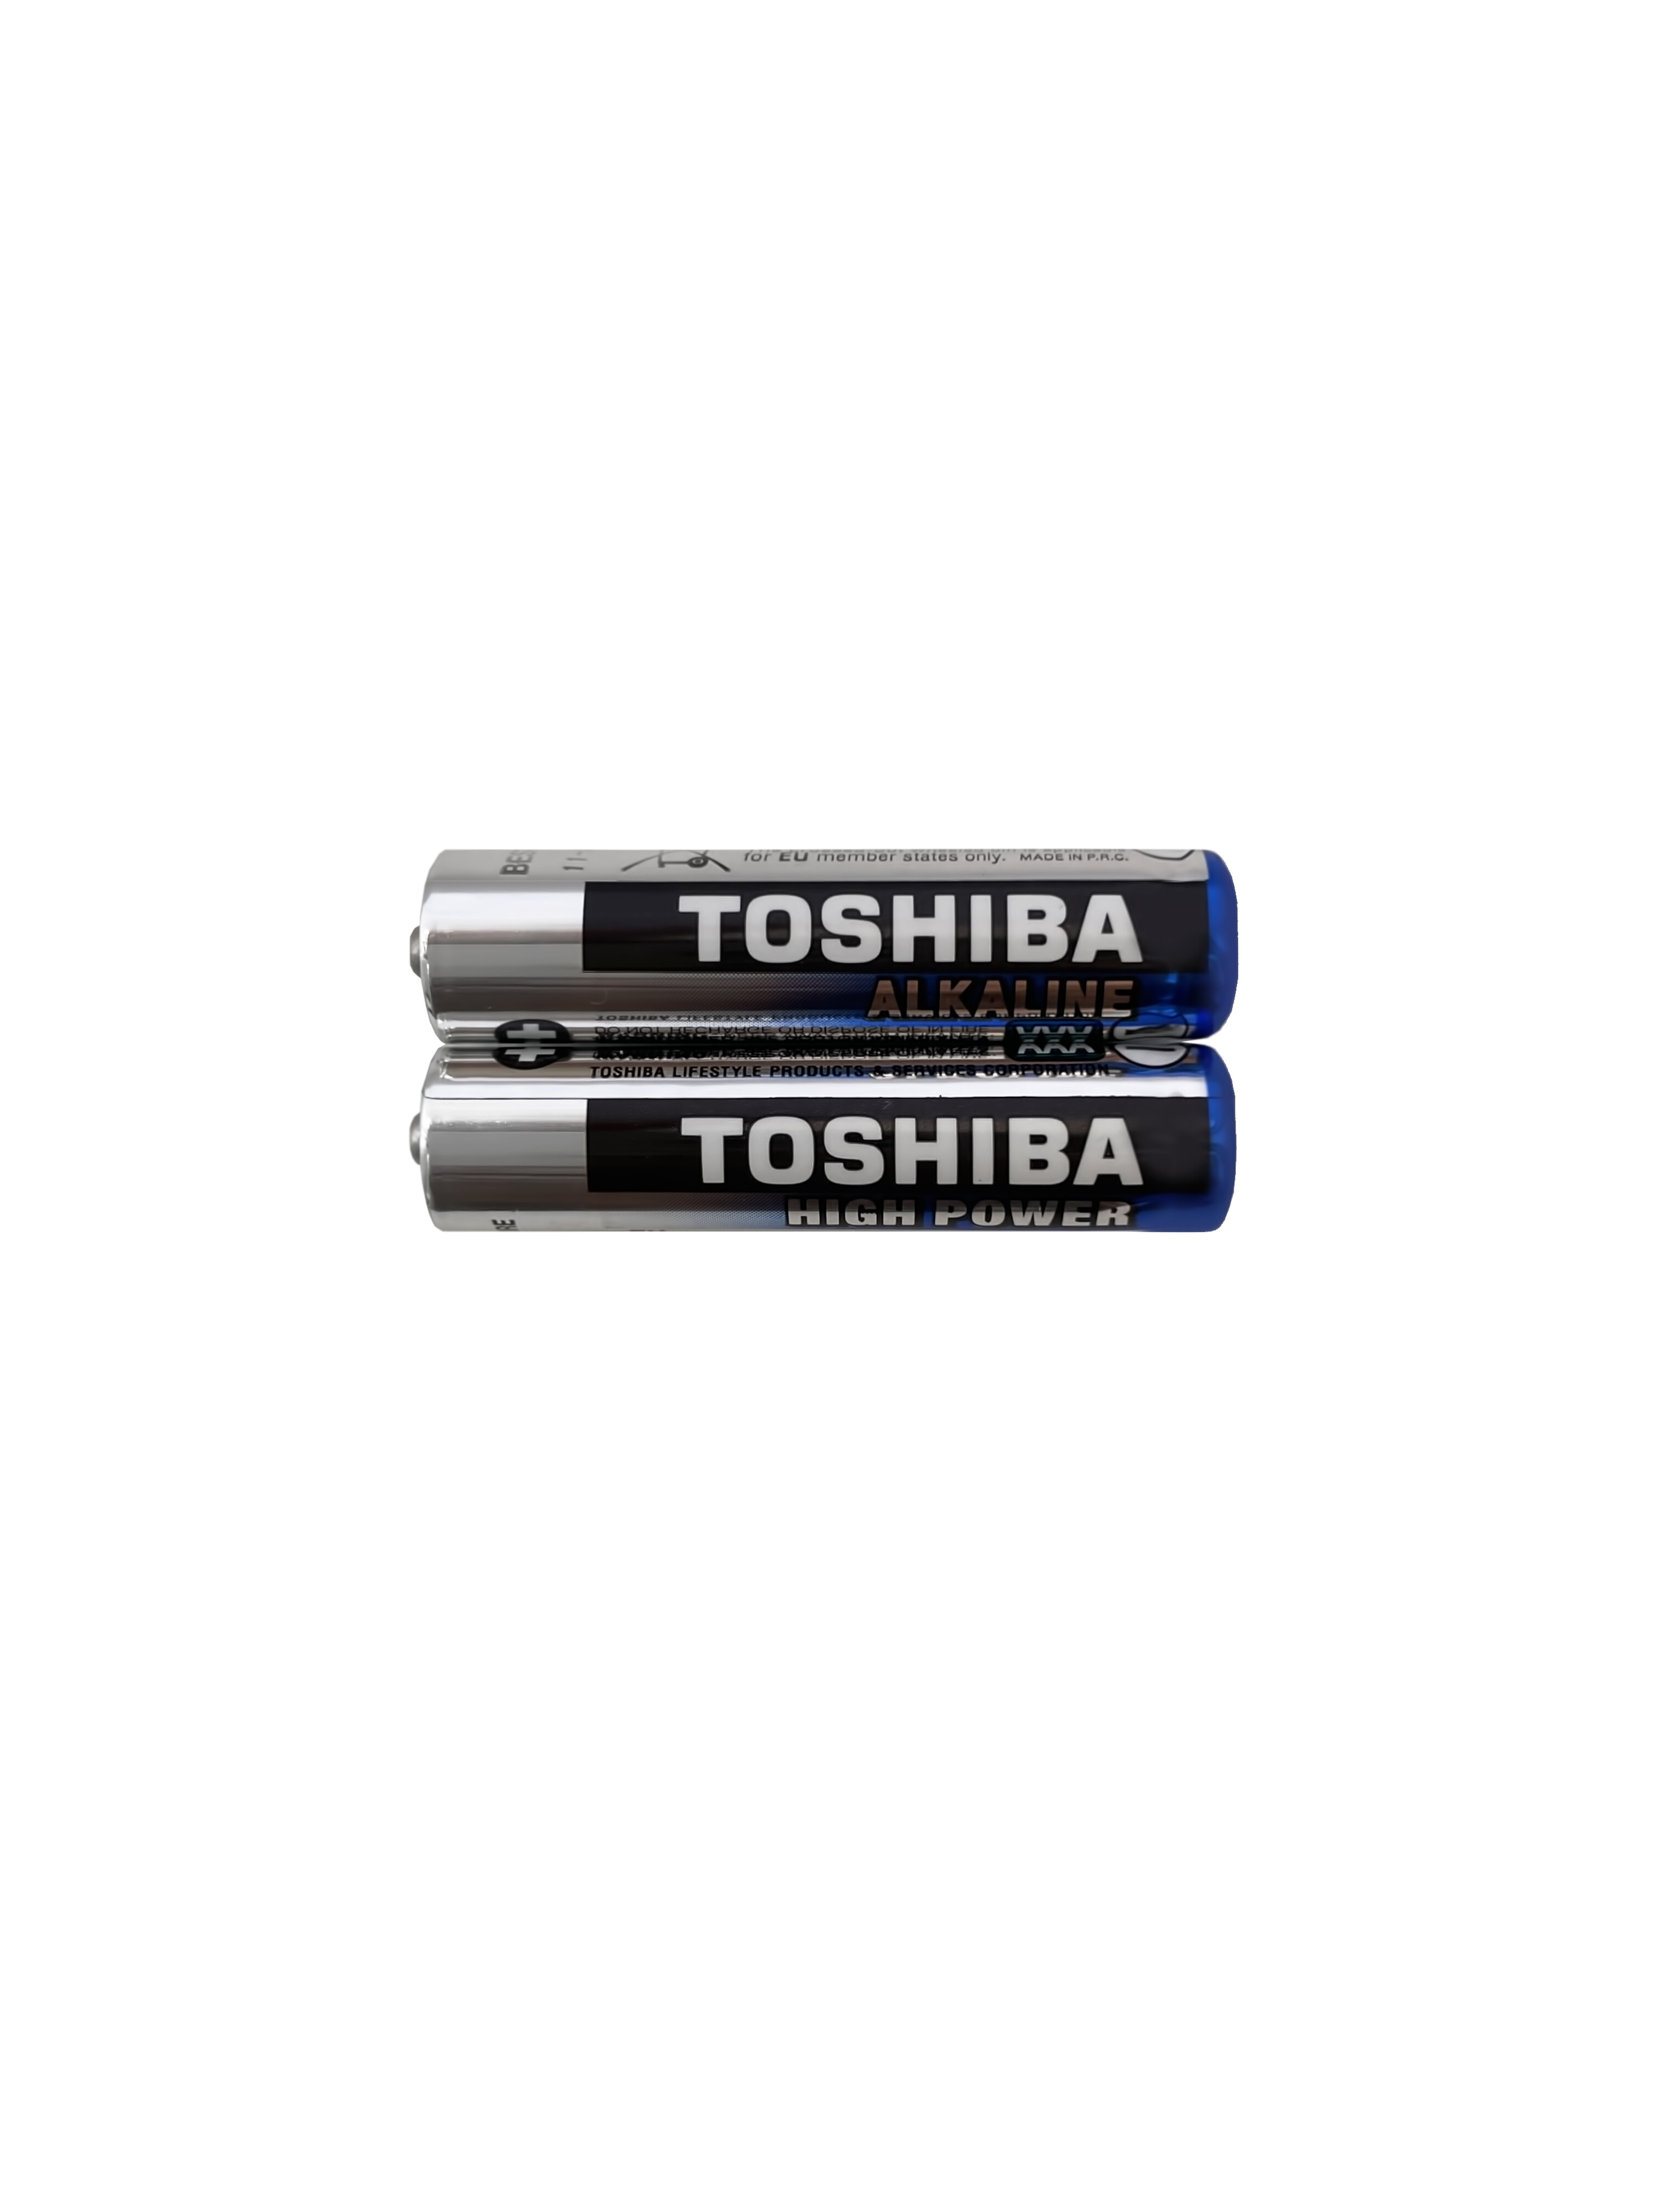 Батарейки Toshiba LR03 щелочные (alkaline) МИЗИНЧИК High Power (2шт) AAA 1,5V батарейки toshiba lr14 щелочные alkaline дюймовочка high power 2шт c 1 5v